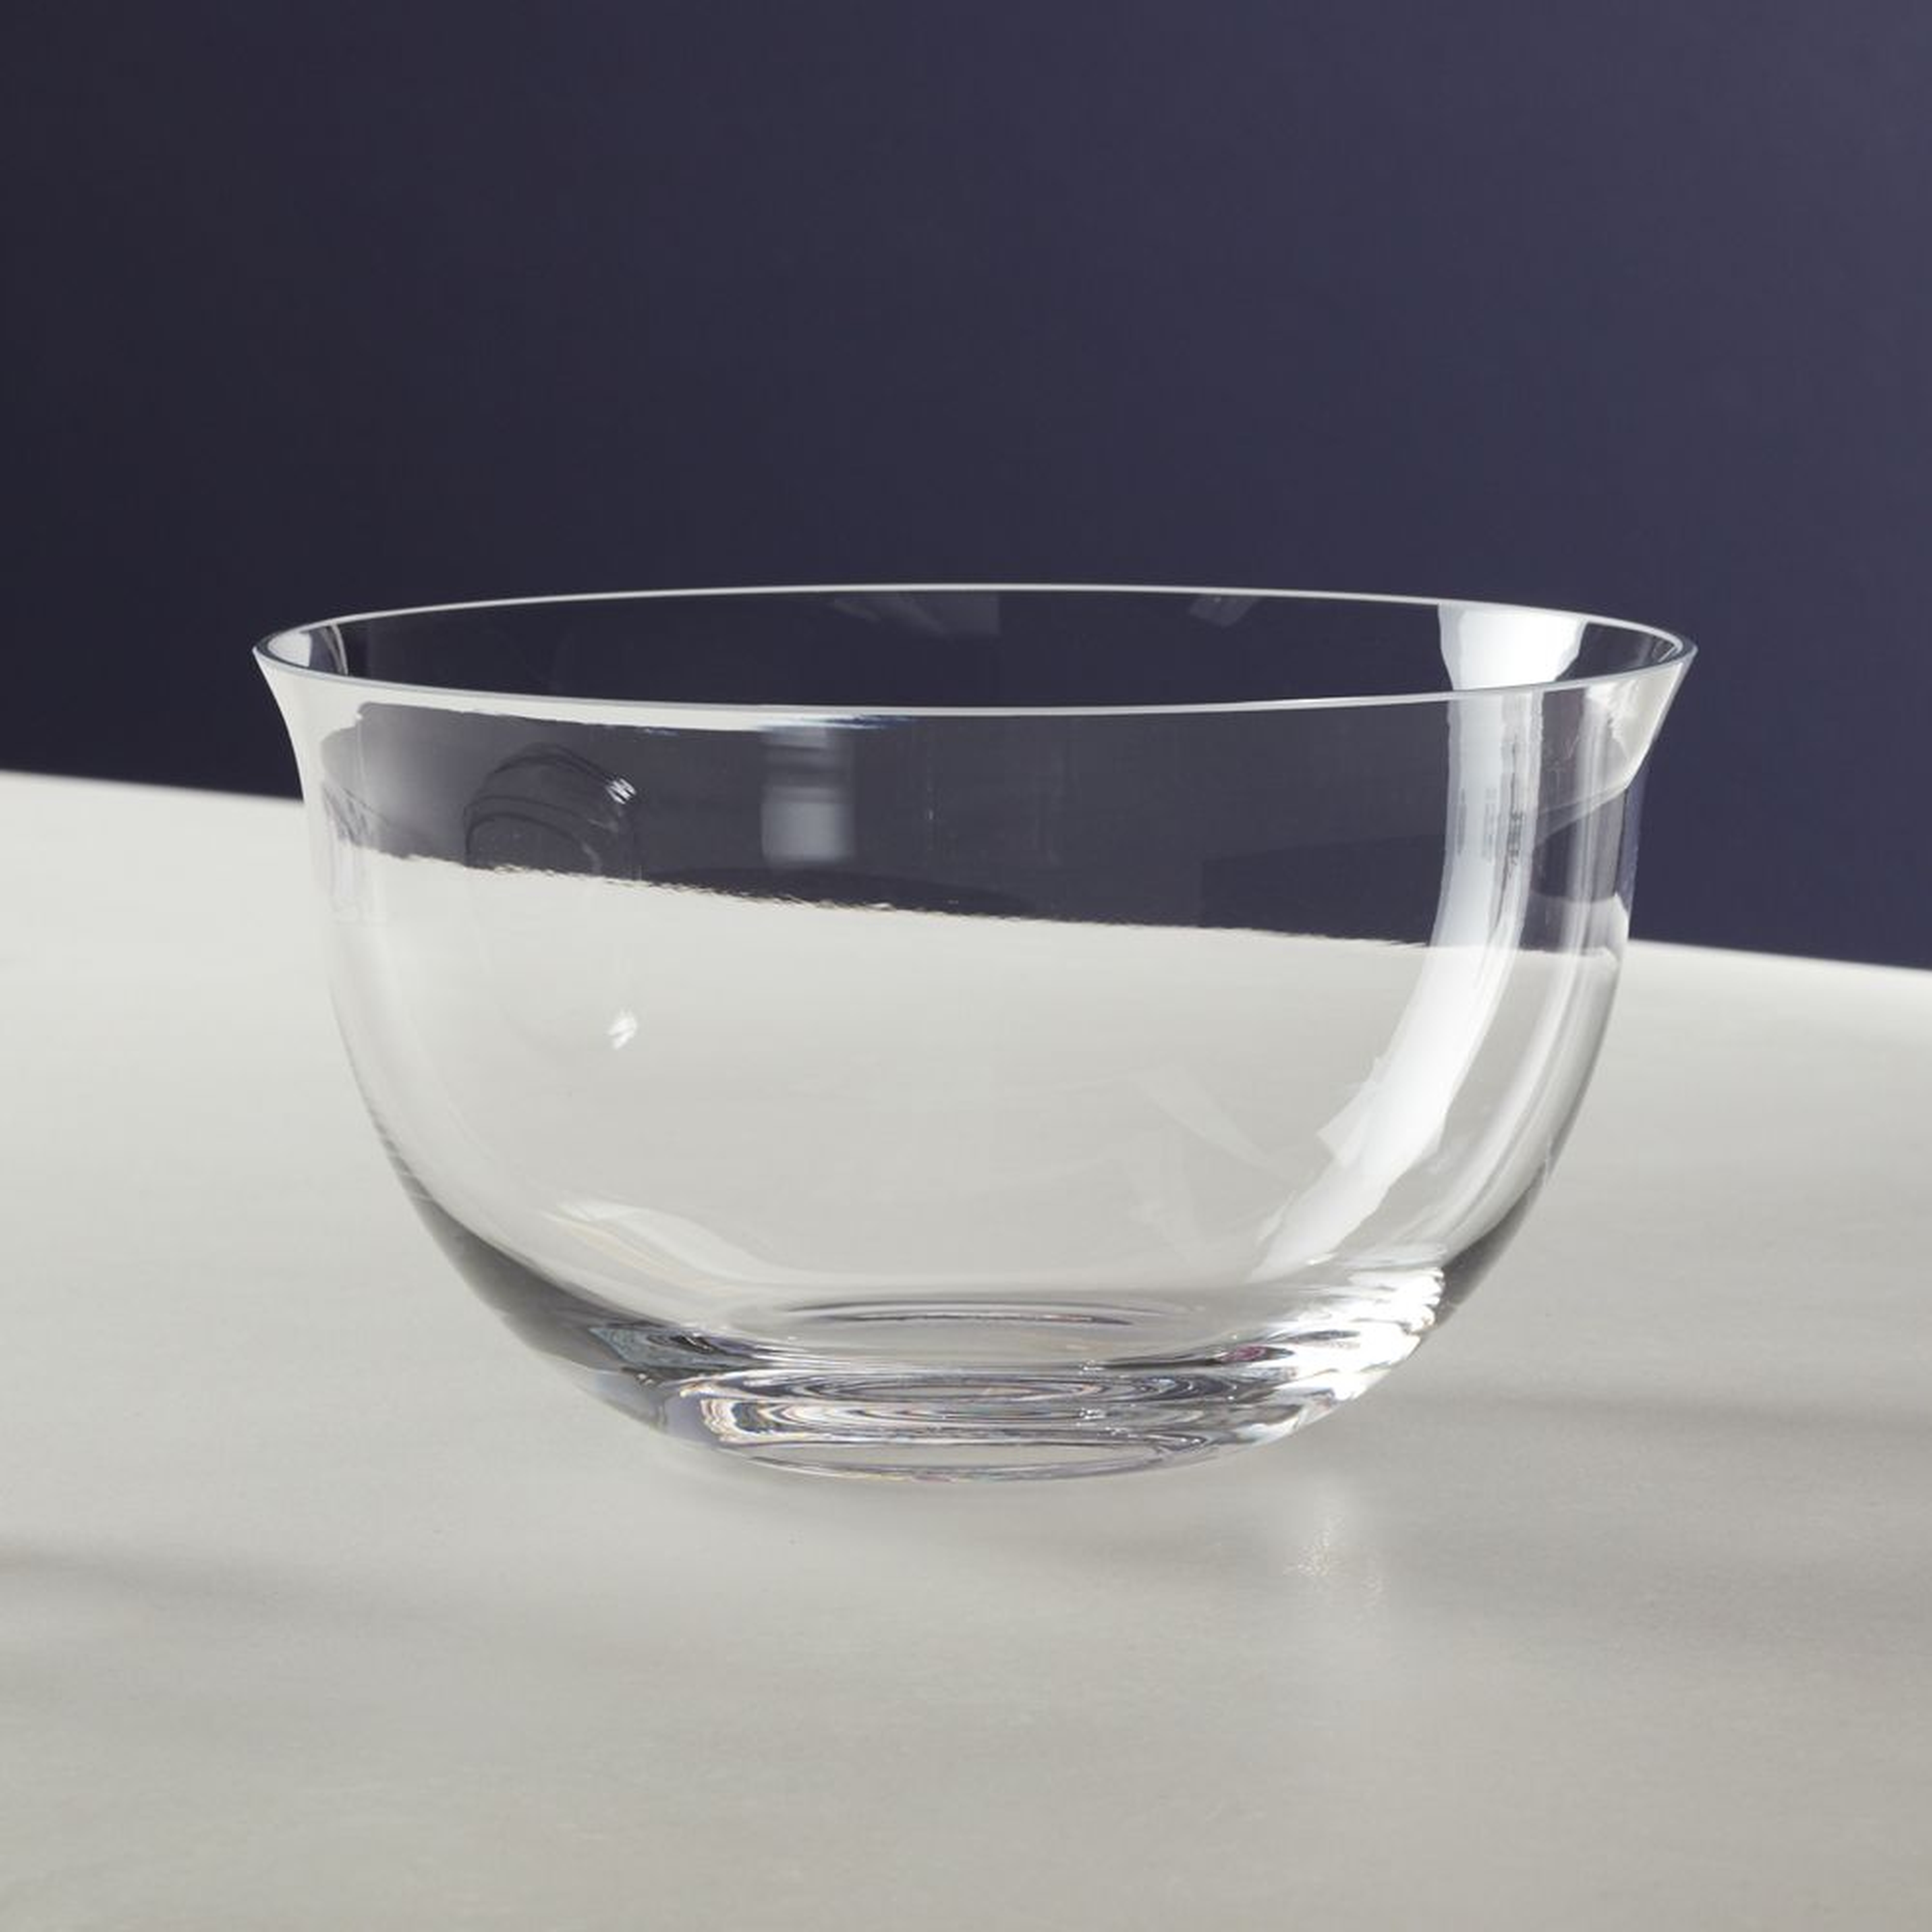 Wilton Large Glass Bowl - CB2